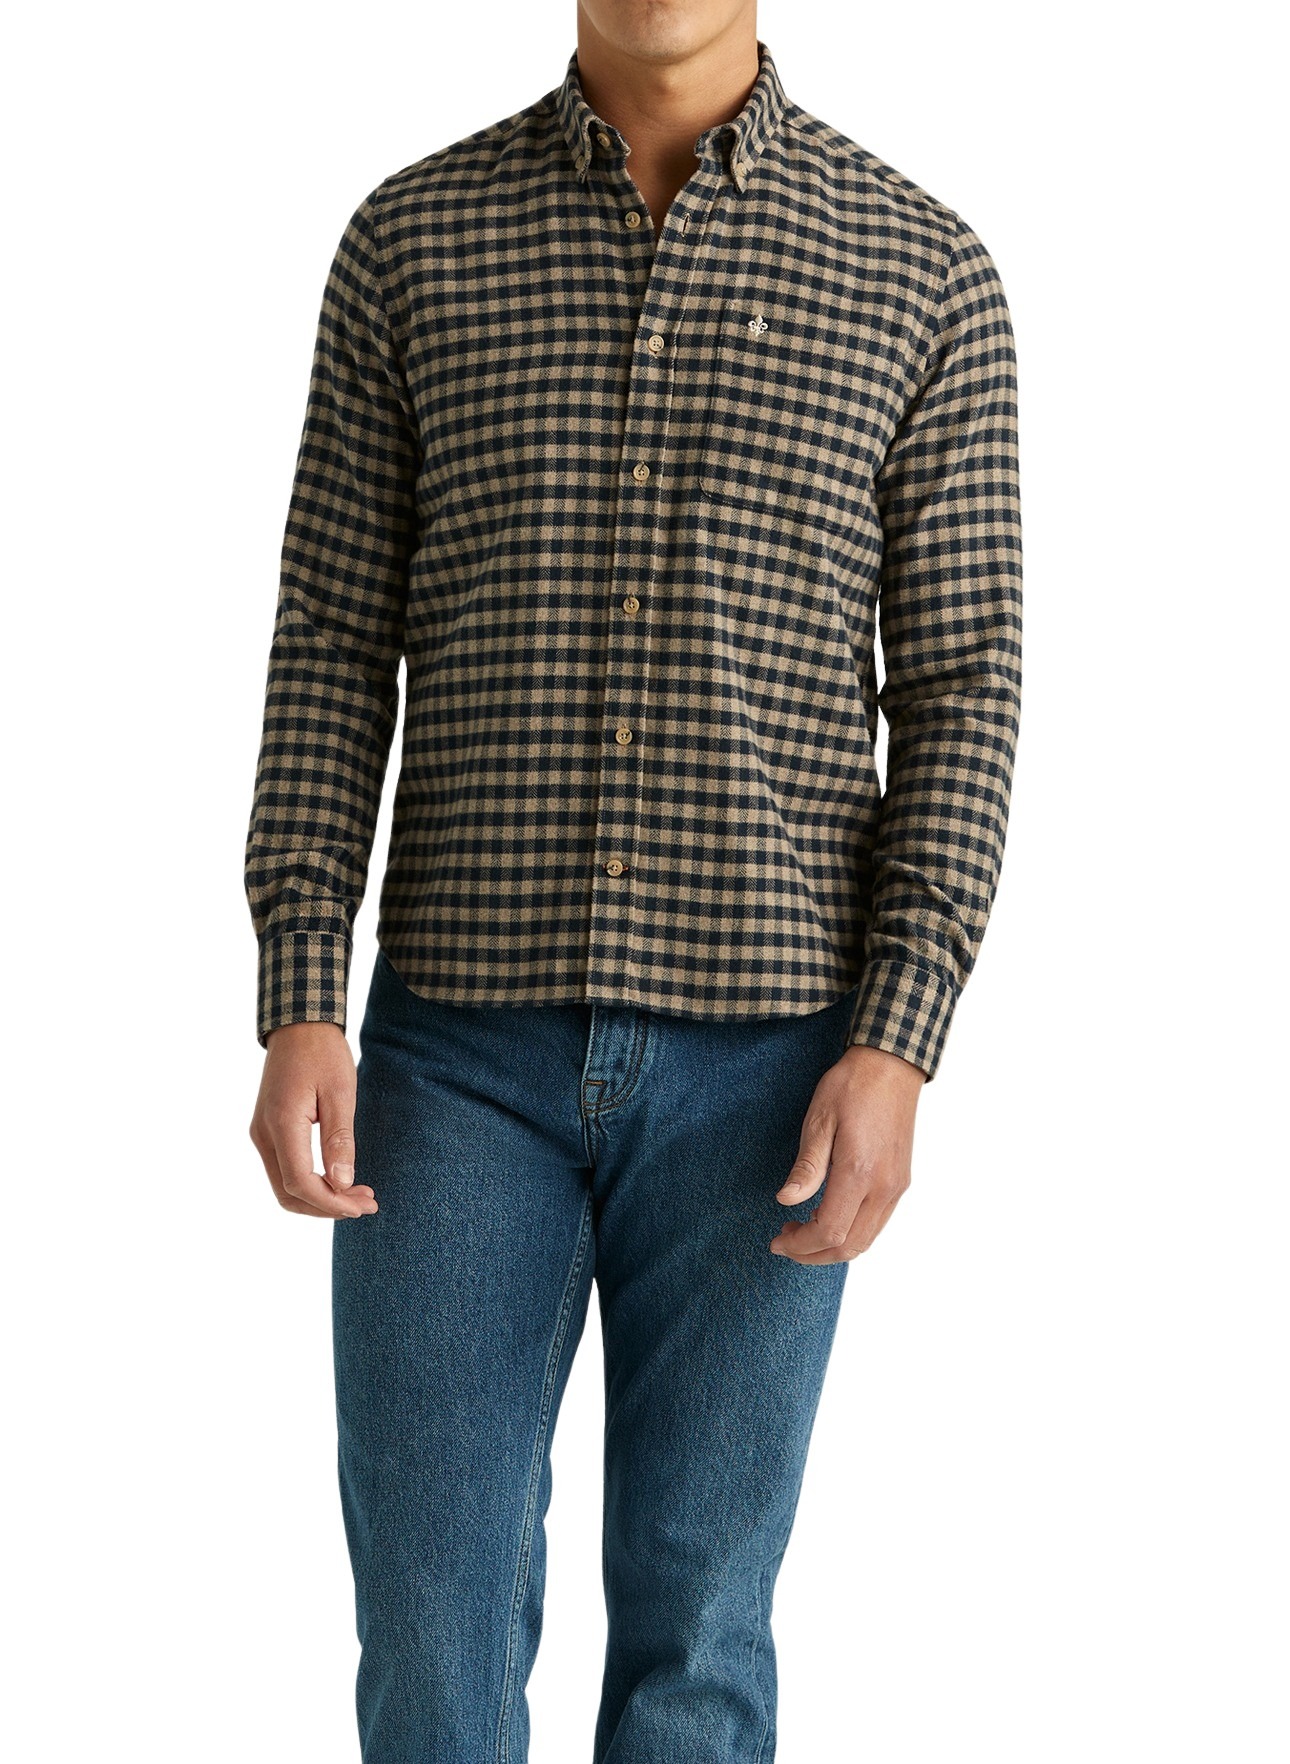 801565-multicheck-flannel-shirt-bd-60-navy-1